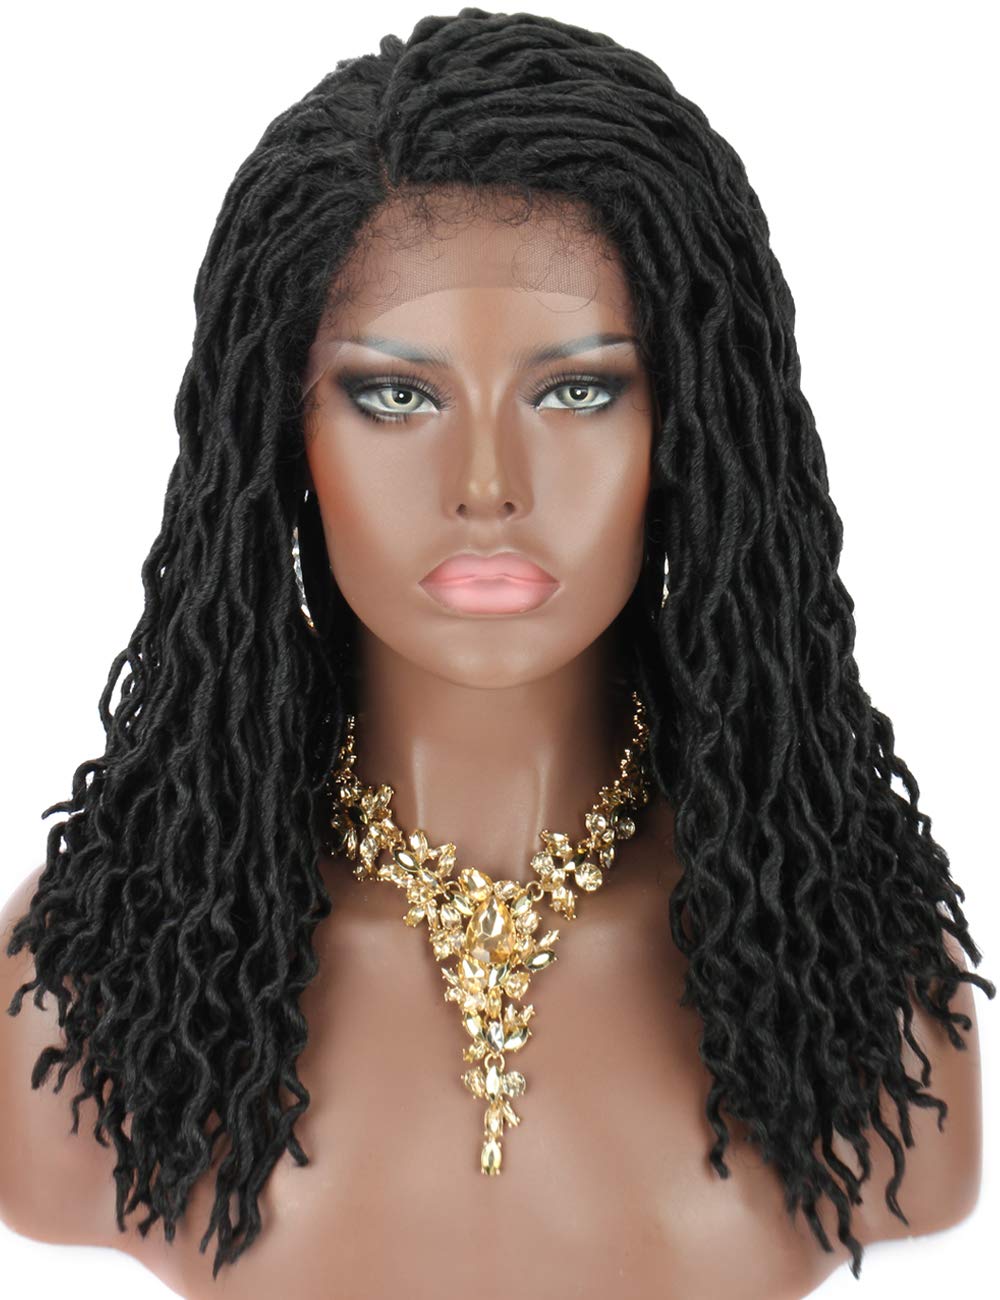 Kalyss Black Synthetic Dread Braids Lace Front Wigs